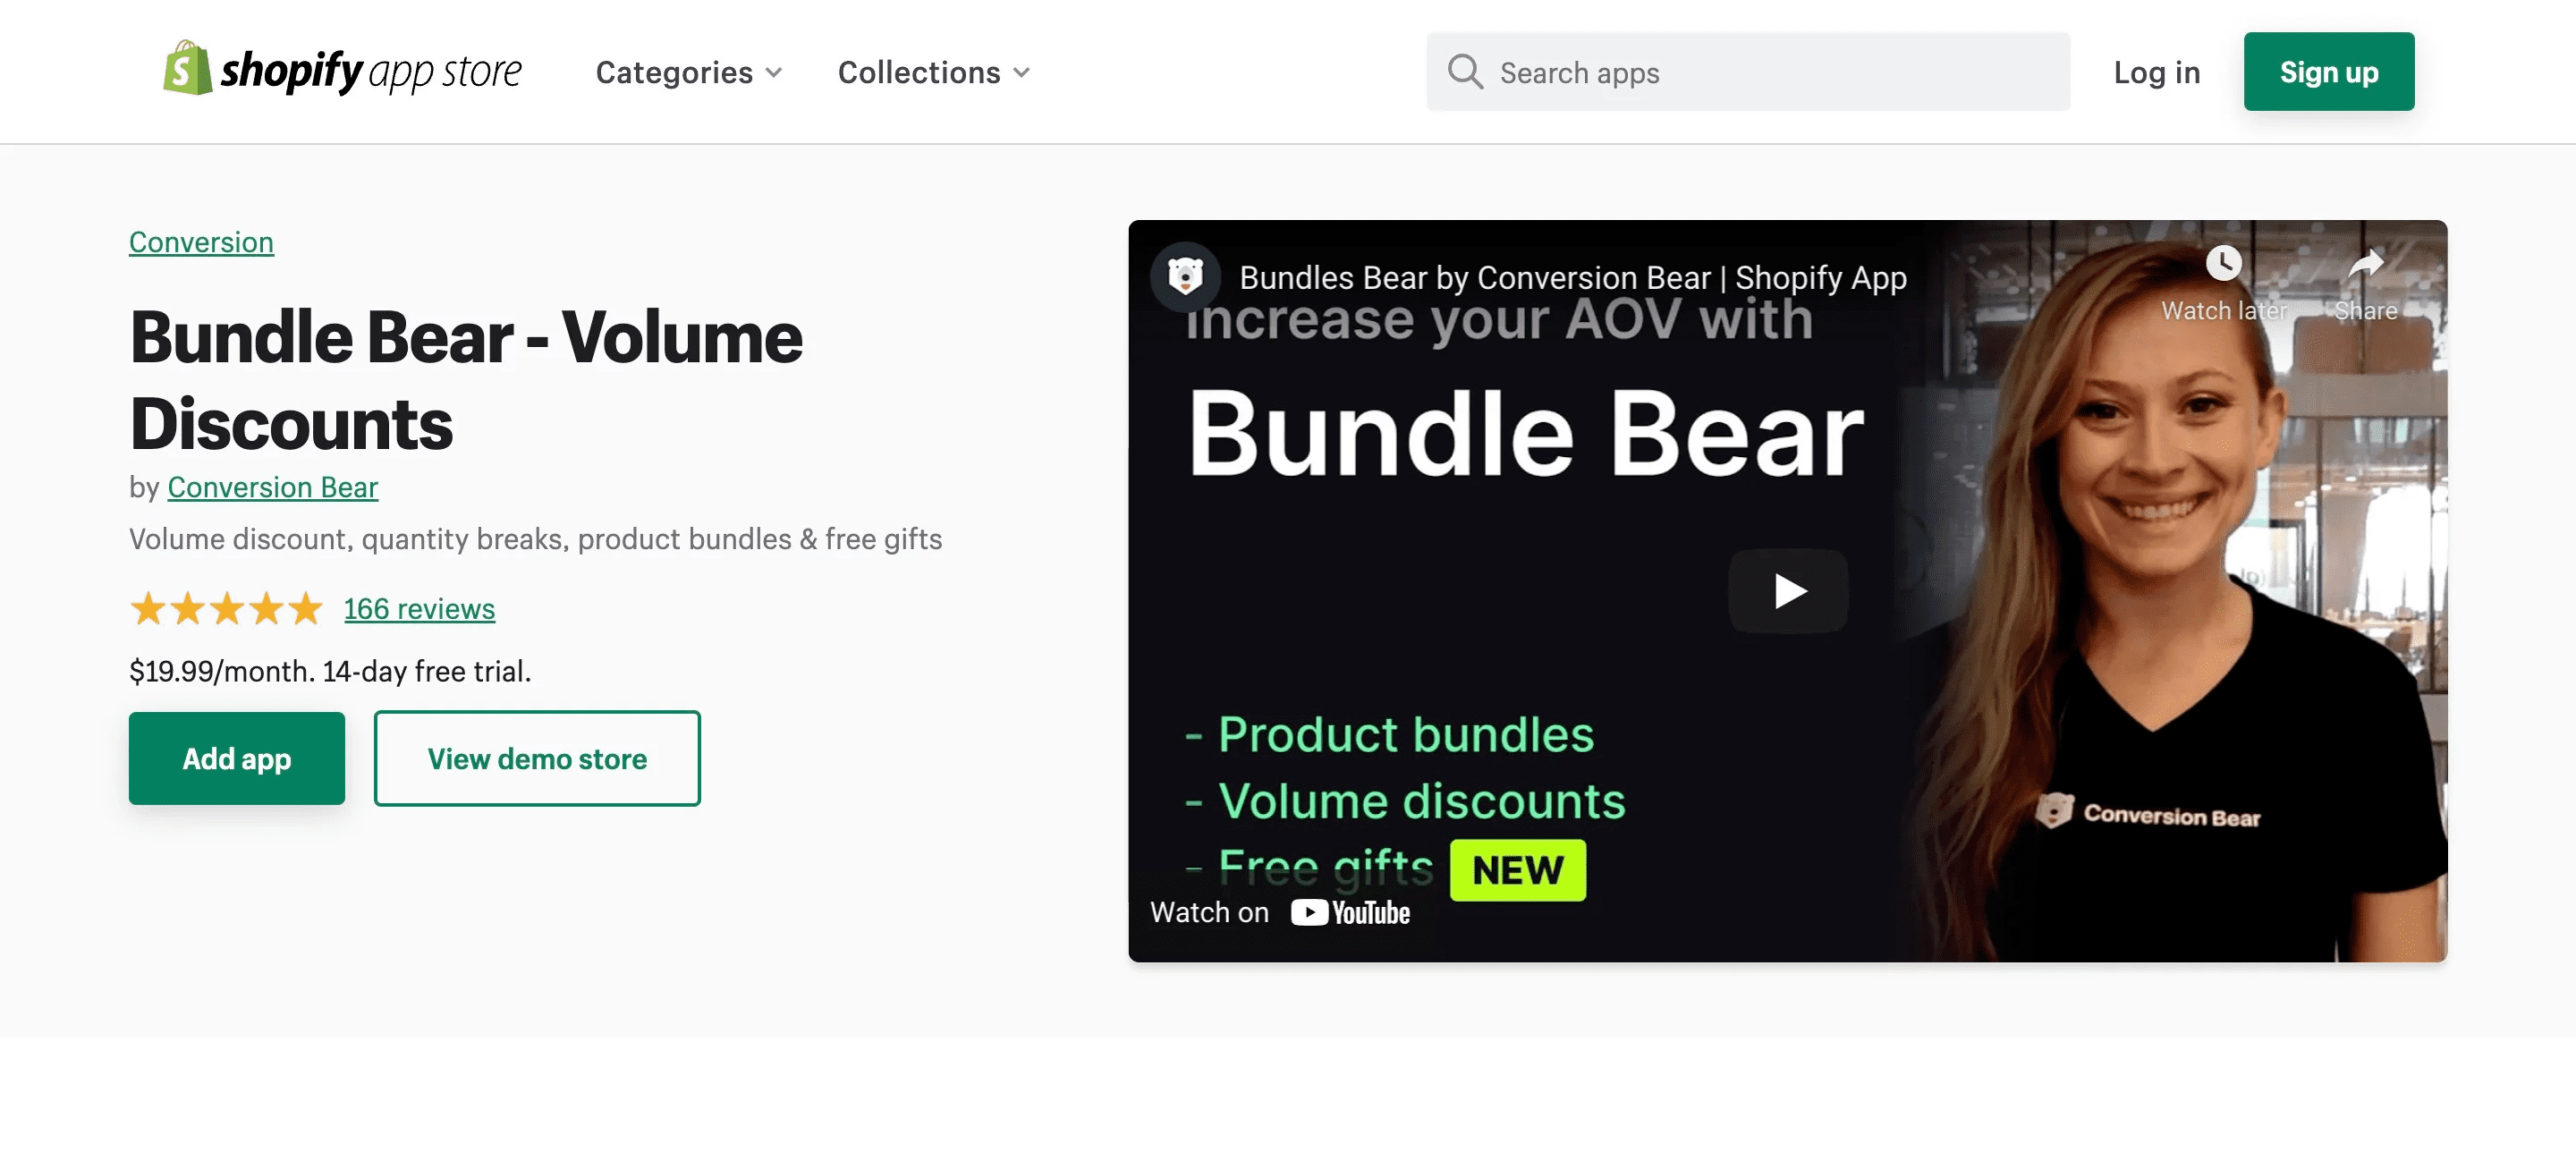 Bundle Bear ‑ Volume Discounts